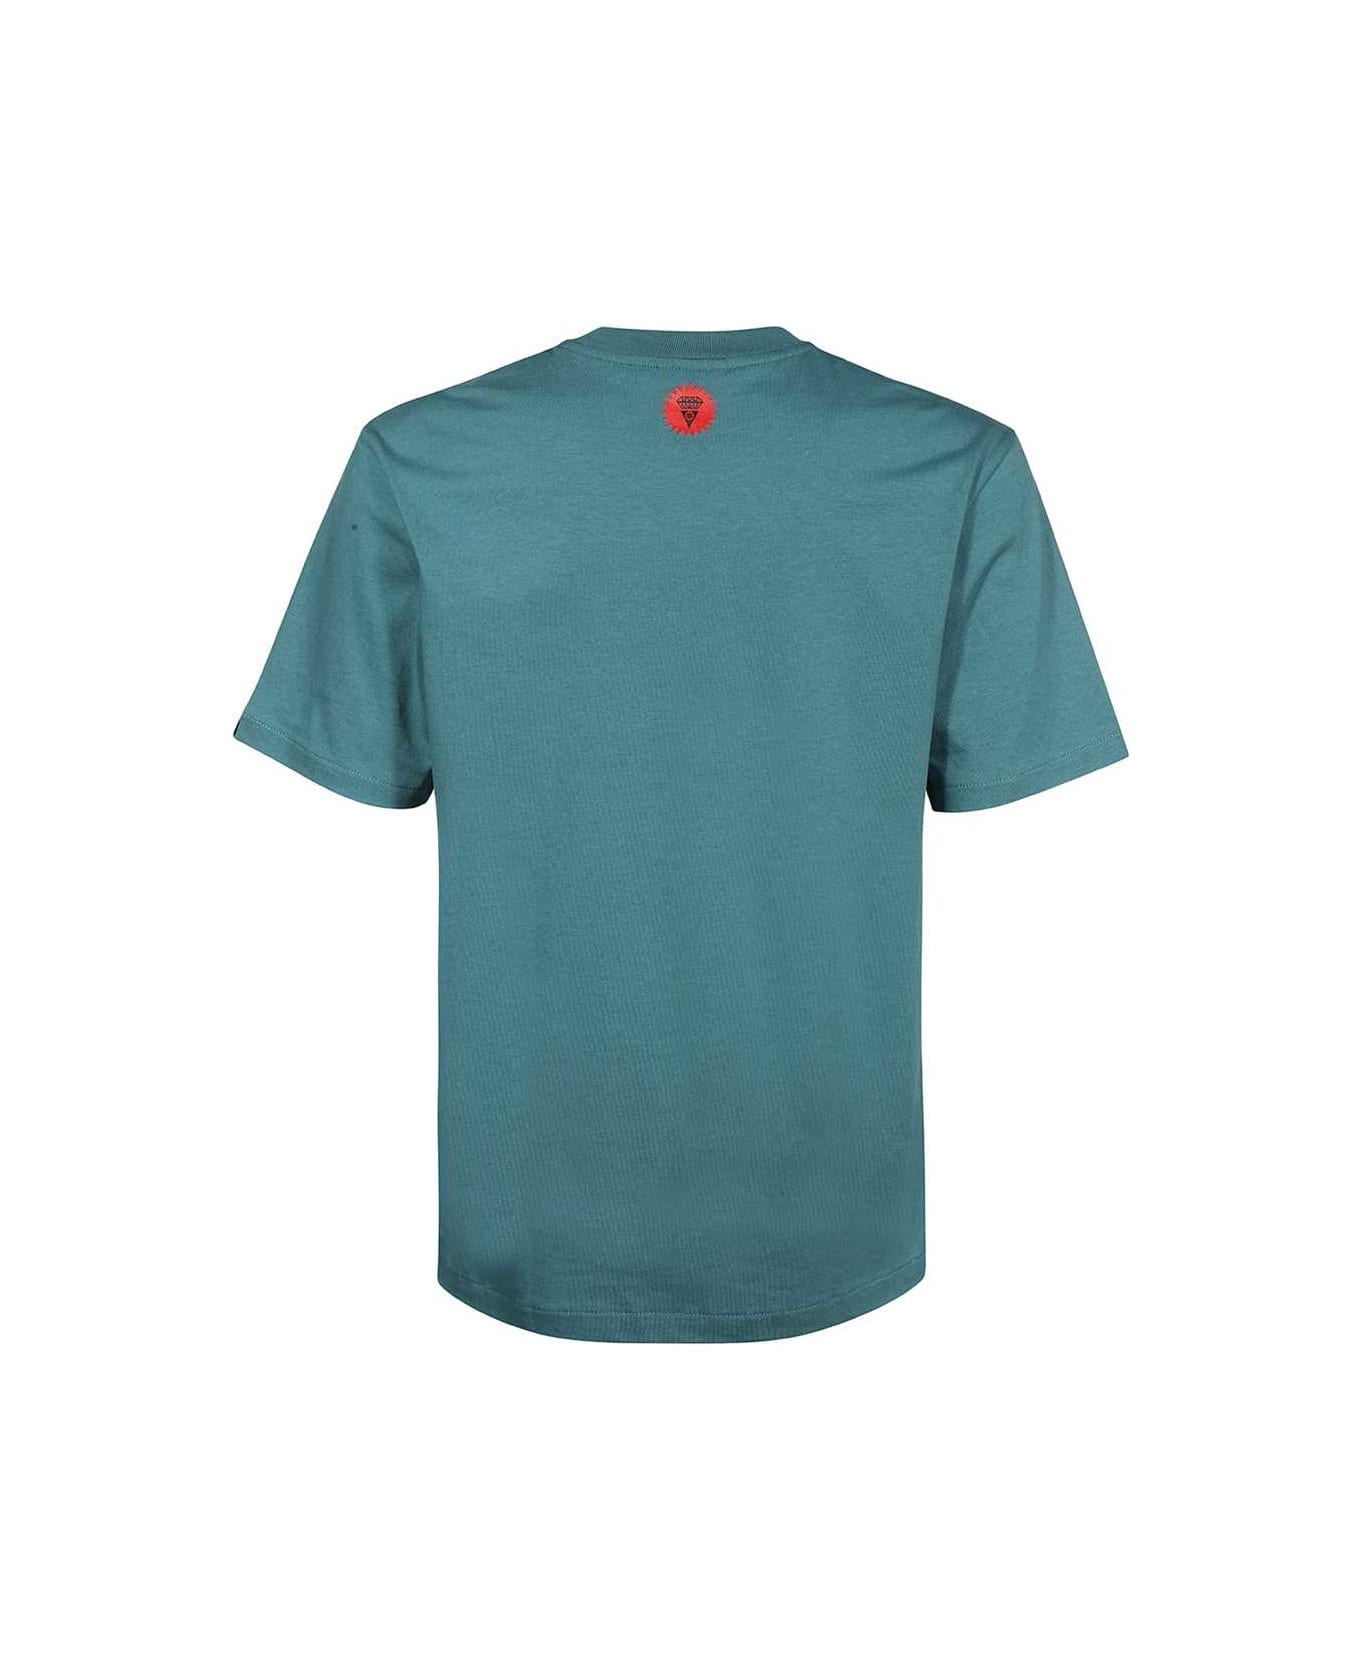 Icecream Printed Cotton T-shirt - turquoise